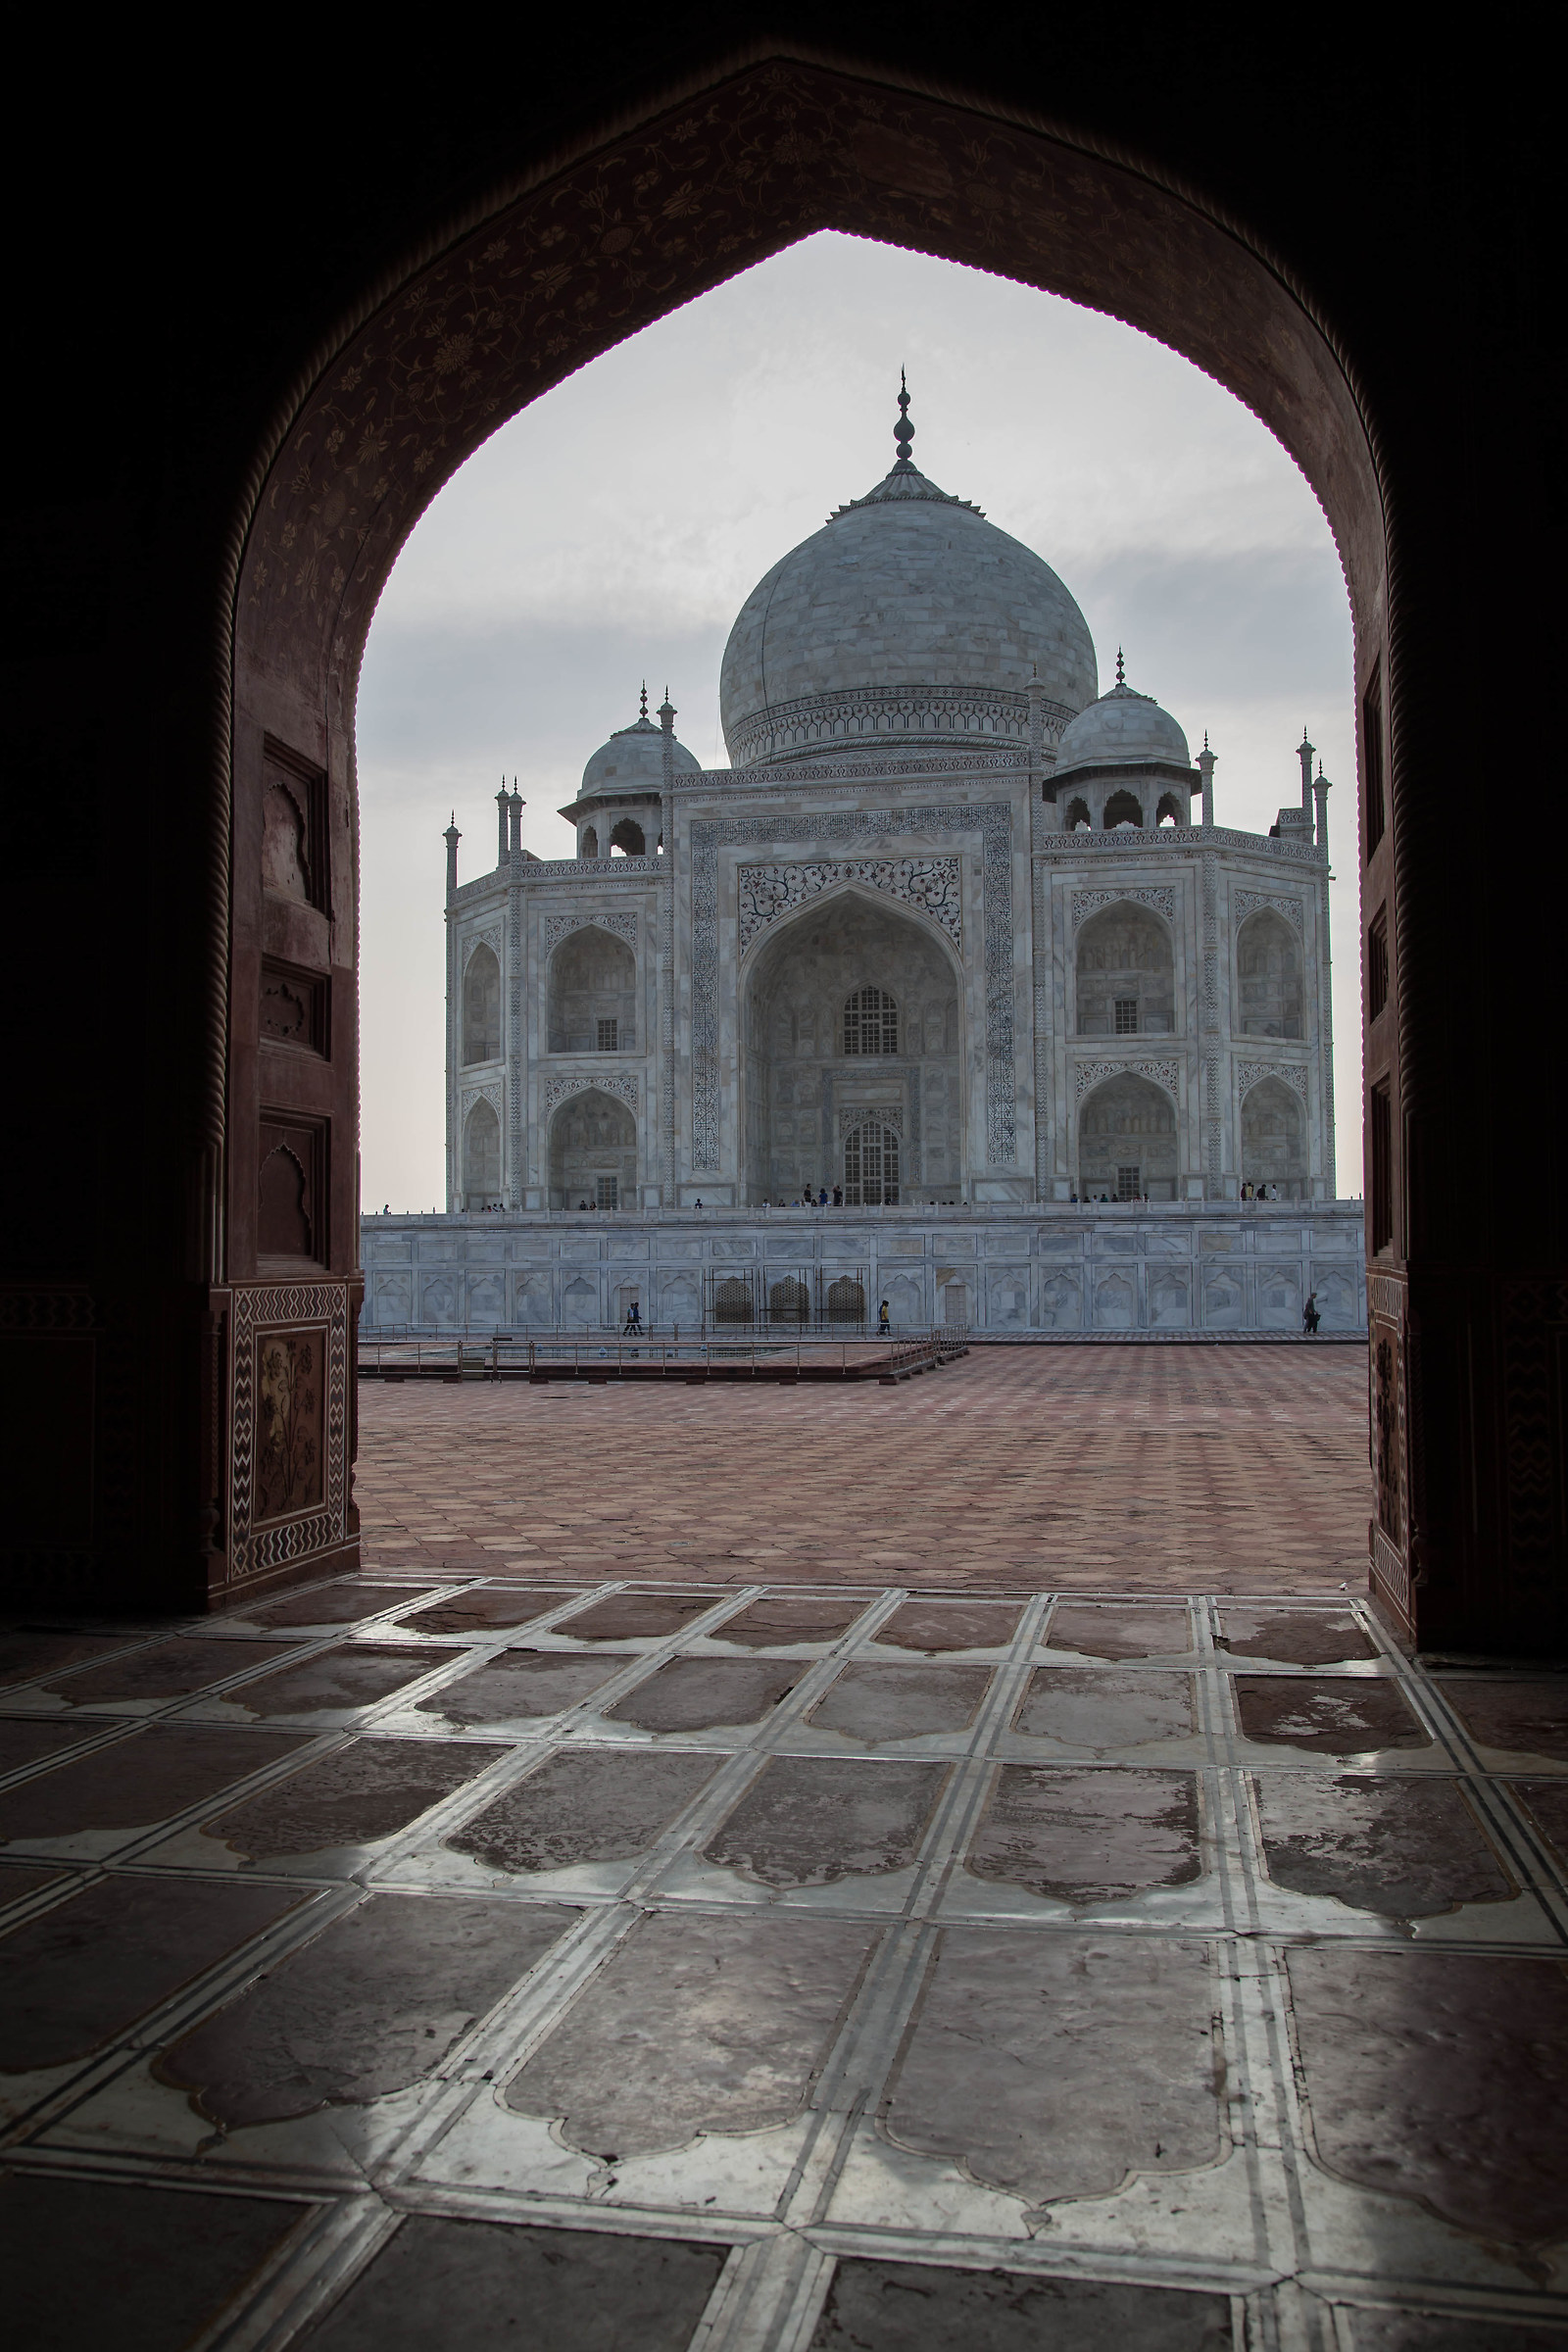 The Taj Mahal in light and shadow...